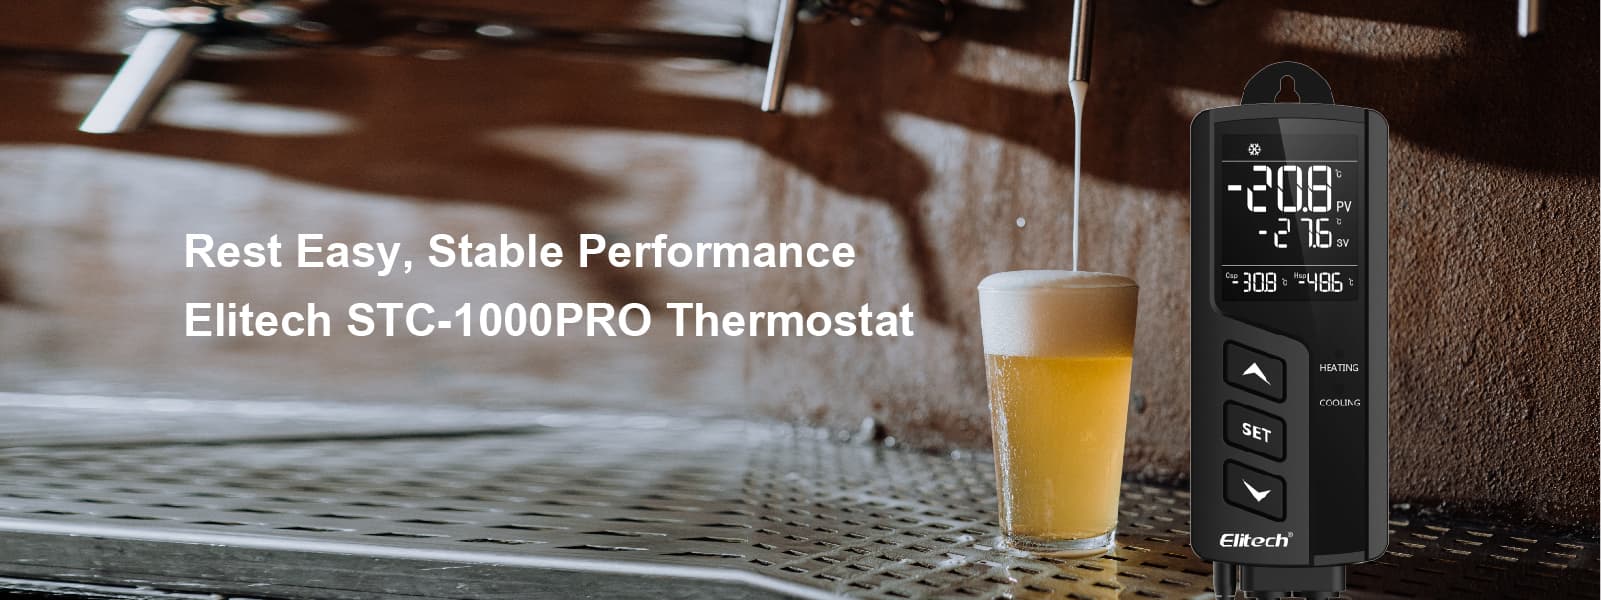 Elitech STC-1000Pro Thermostat Stable Performance-Elitech UK